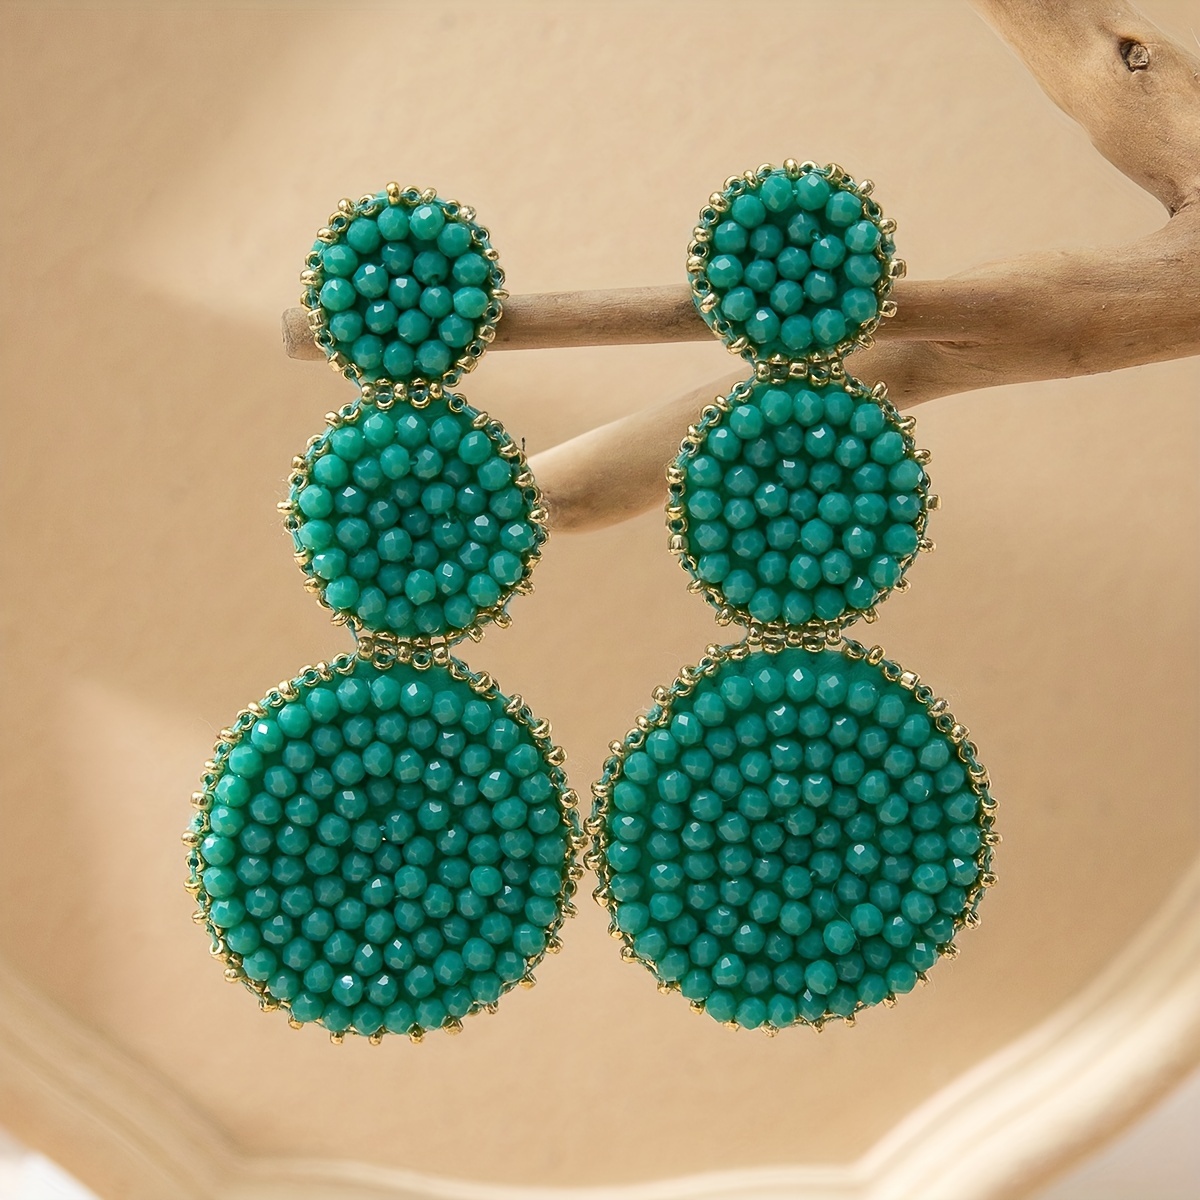 

Handmade Circle Glass Beads Drop Earrings Jewelry Gift For Women Trendy Female Gift